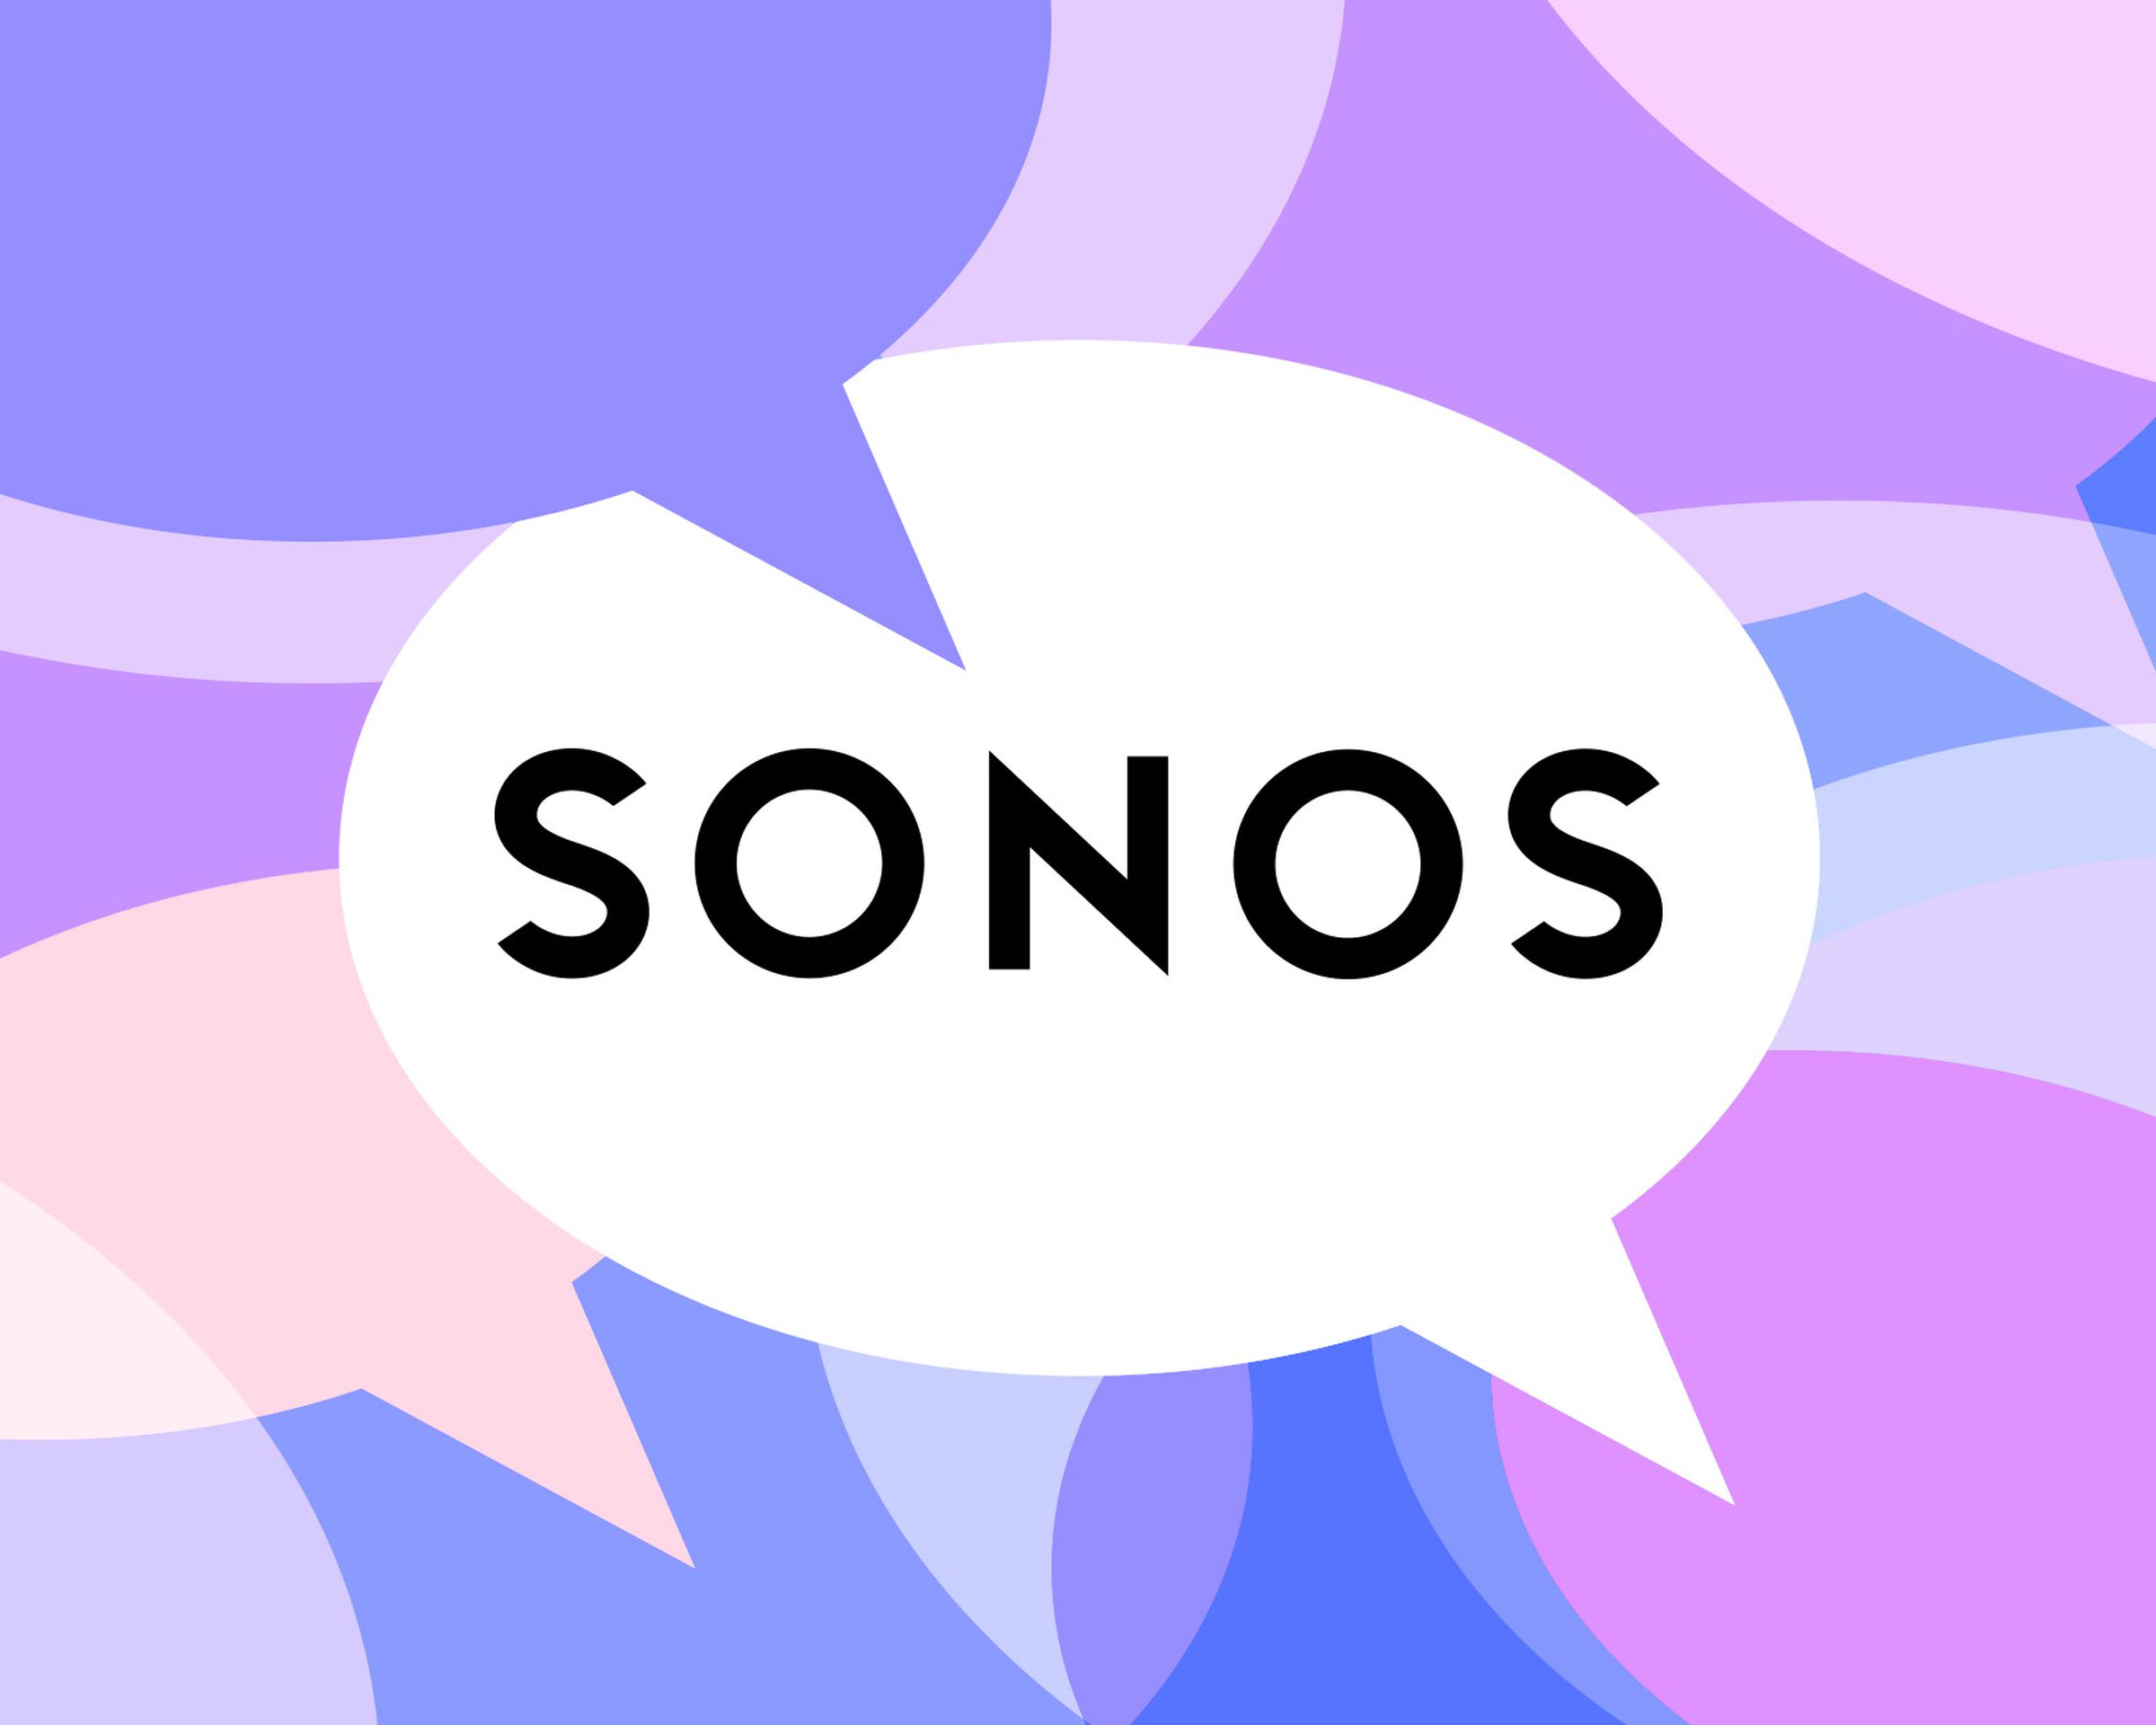 An illustration of the Sonos logo.